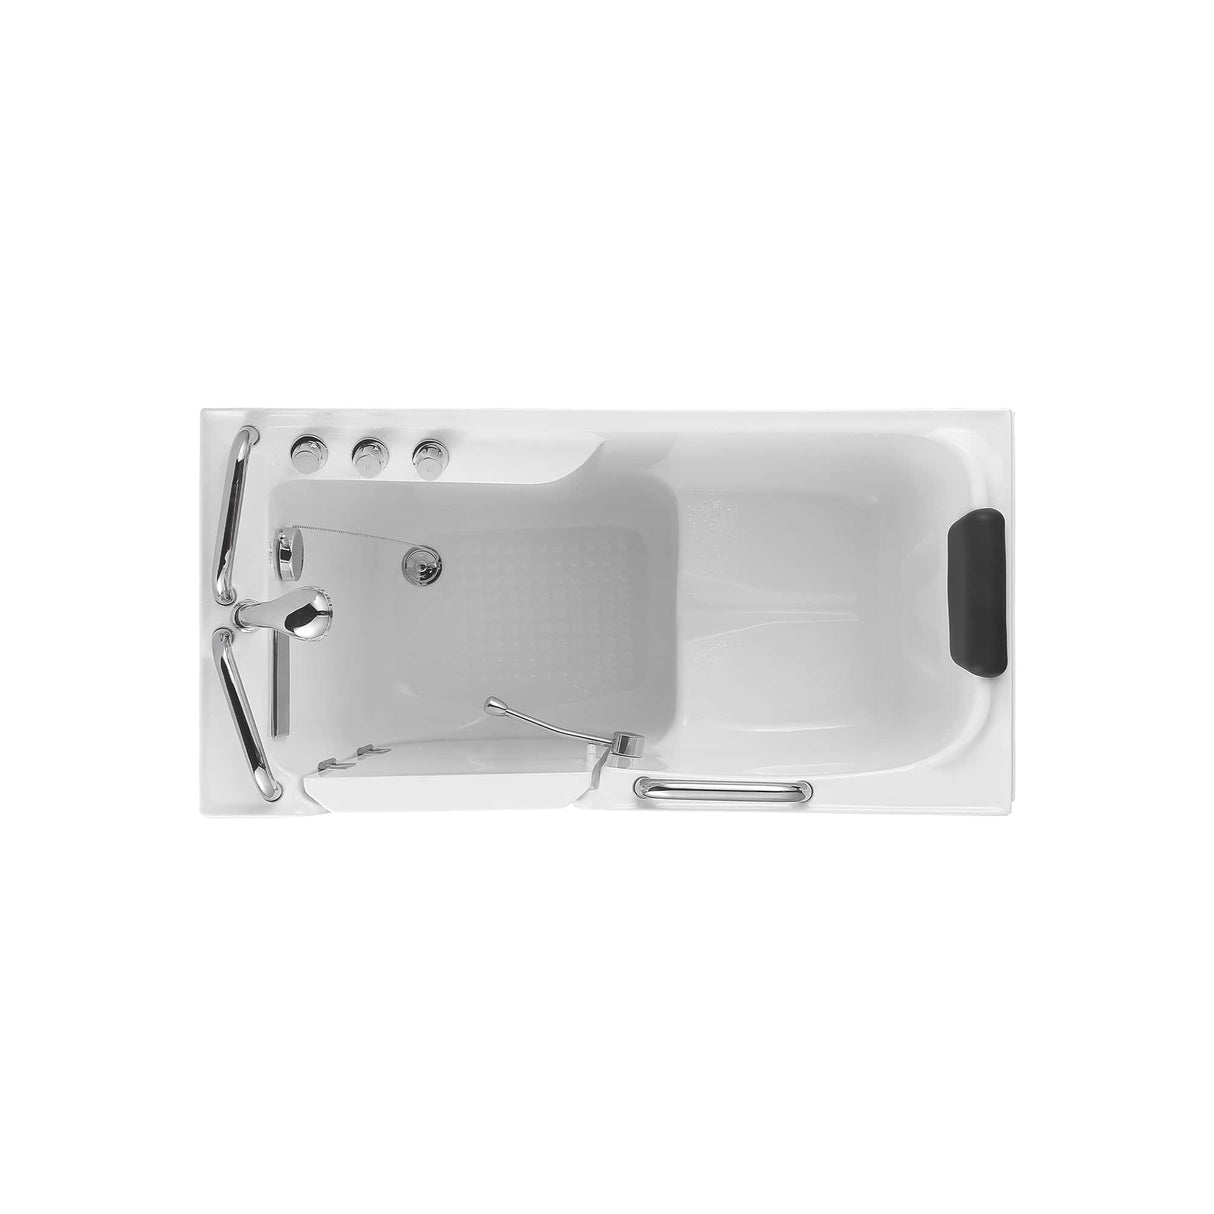 Empava-53WIT373 walk-in bathtub with shower aerial view